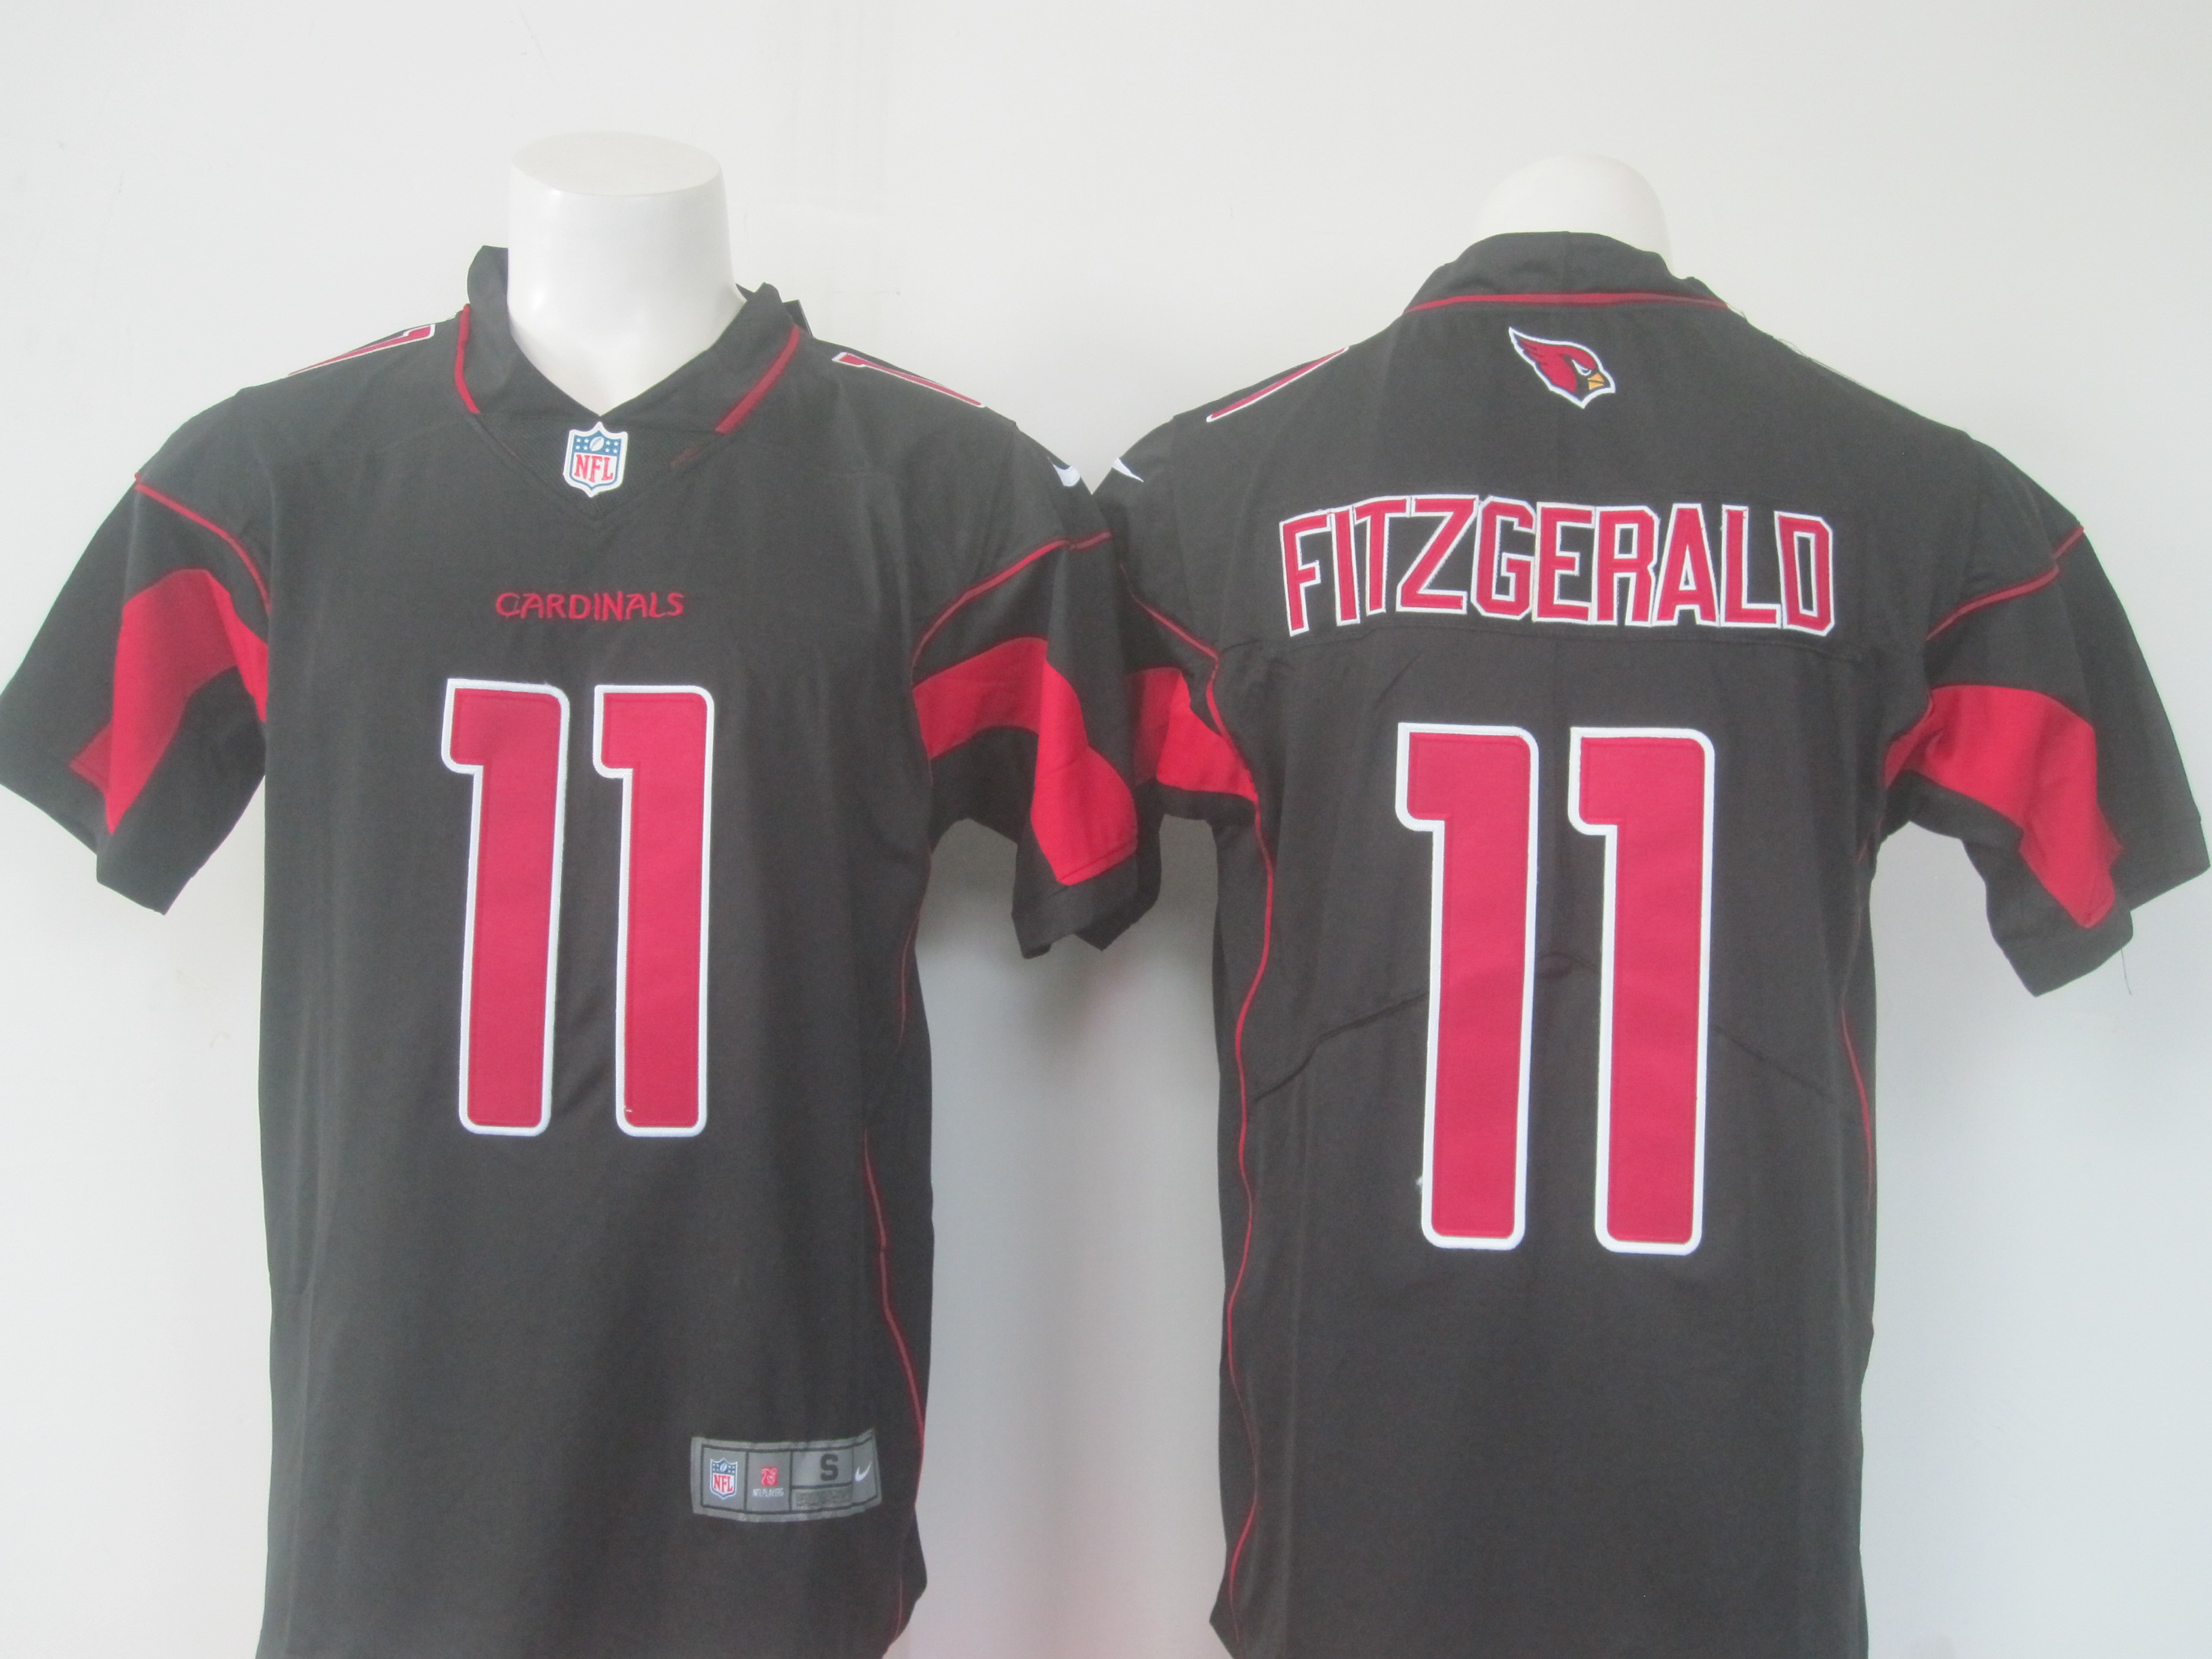 Men's Nike Arizona Cardinals #11 Larry Fitzgerald Black Limited Rush Stitched NFL Jersey